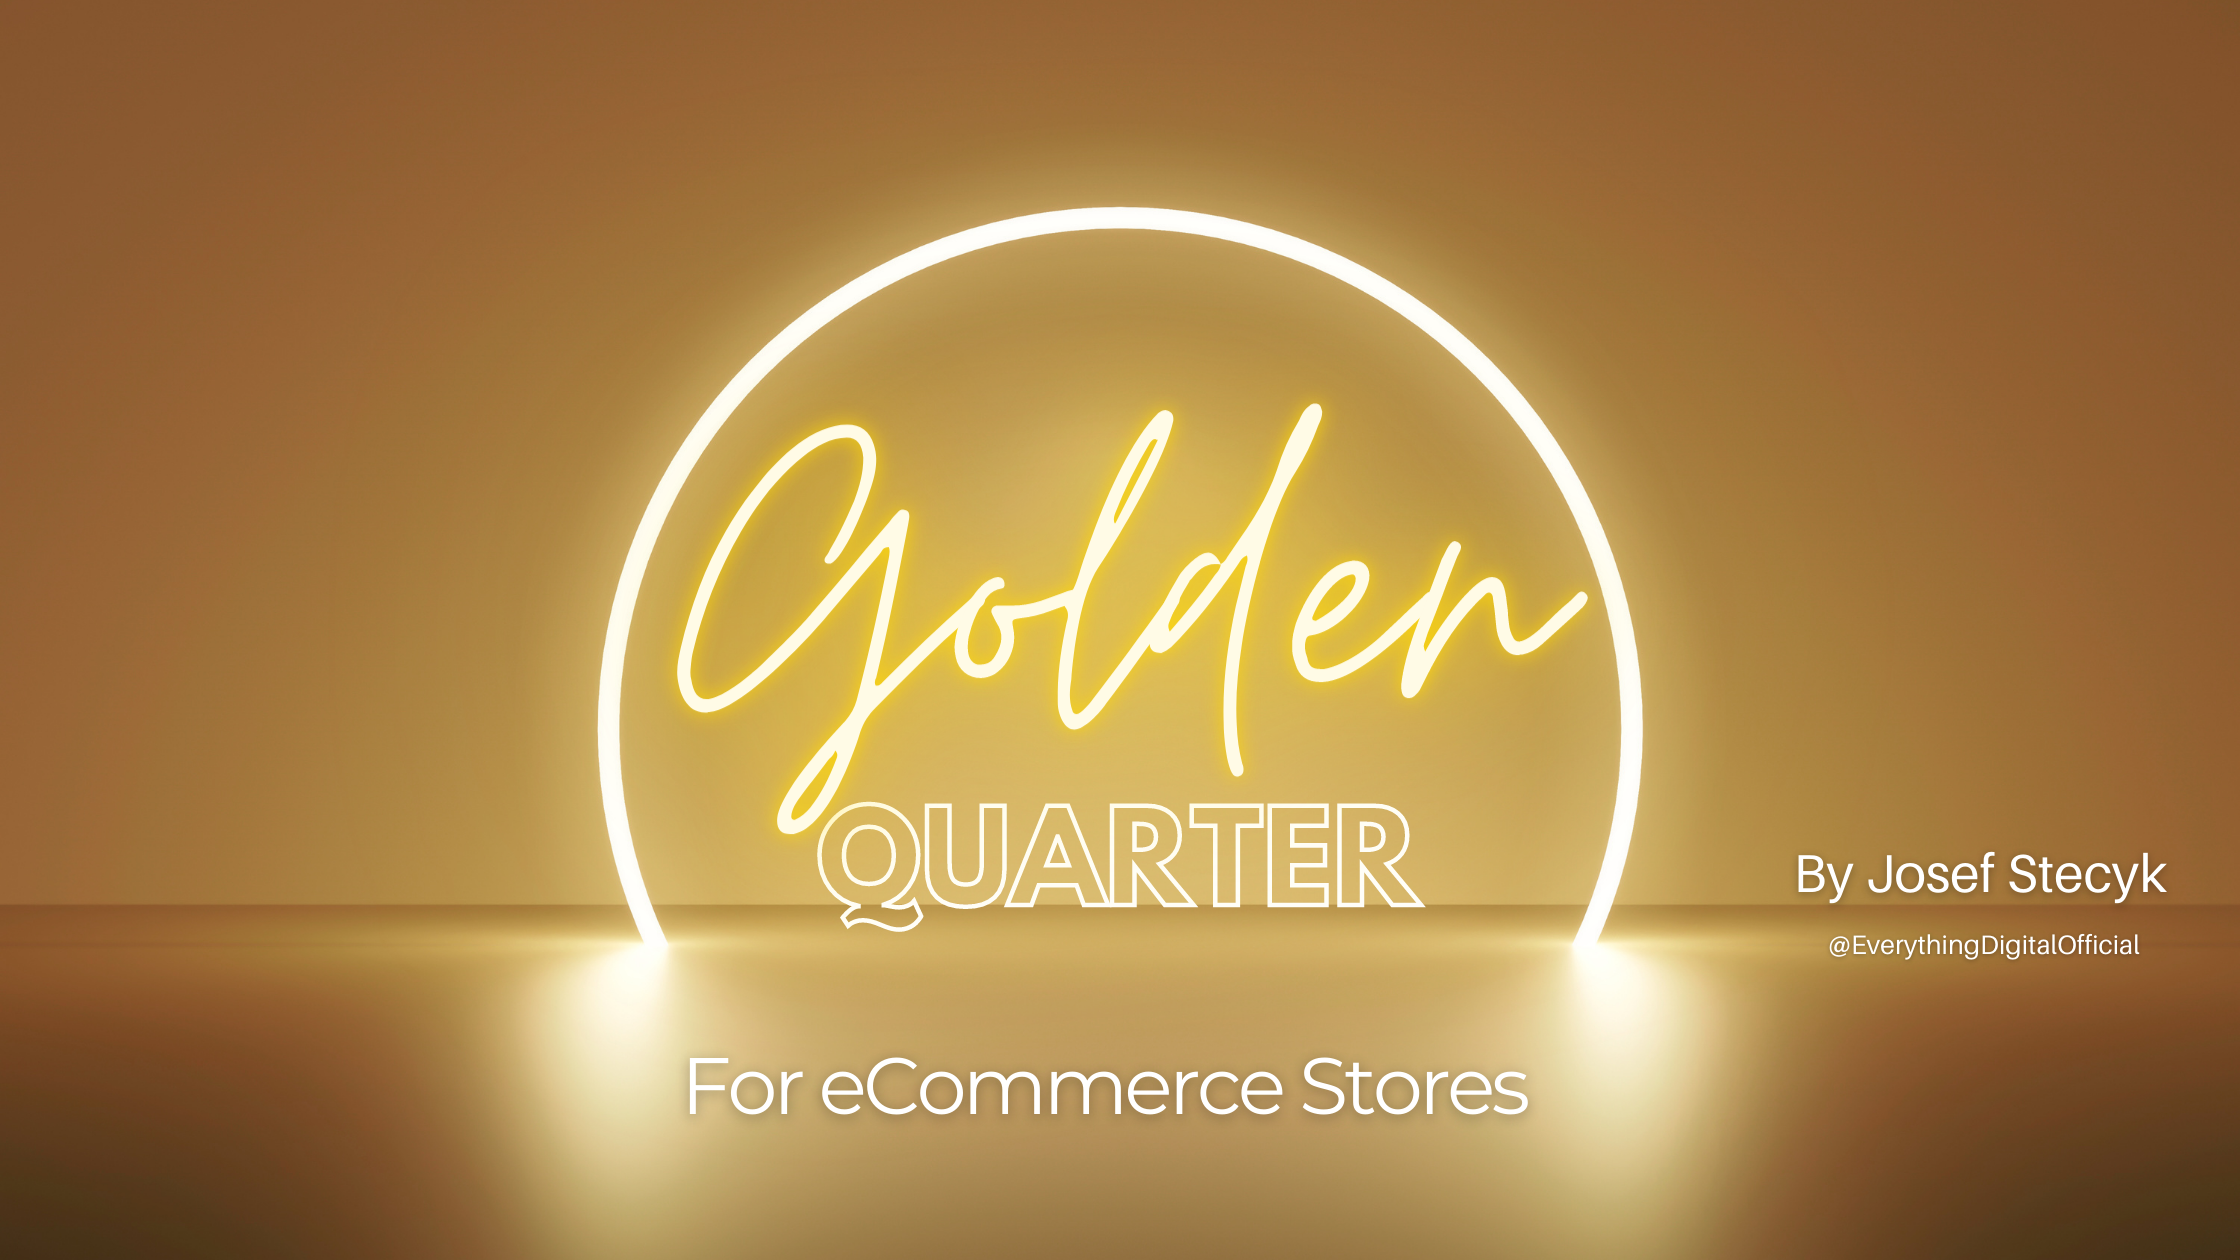 The Golden Quarter For eCommerce Stores